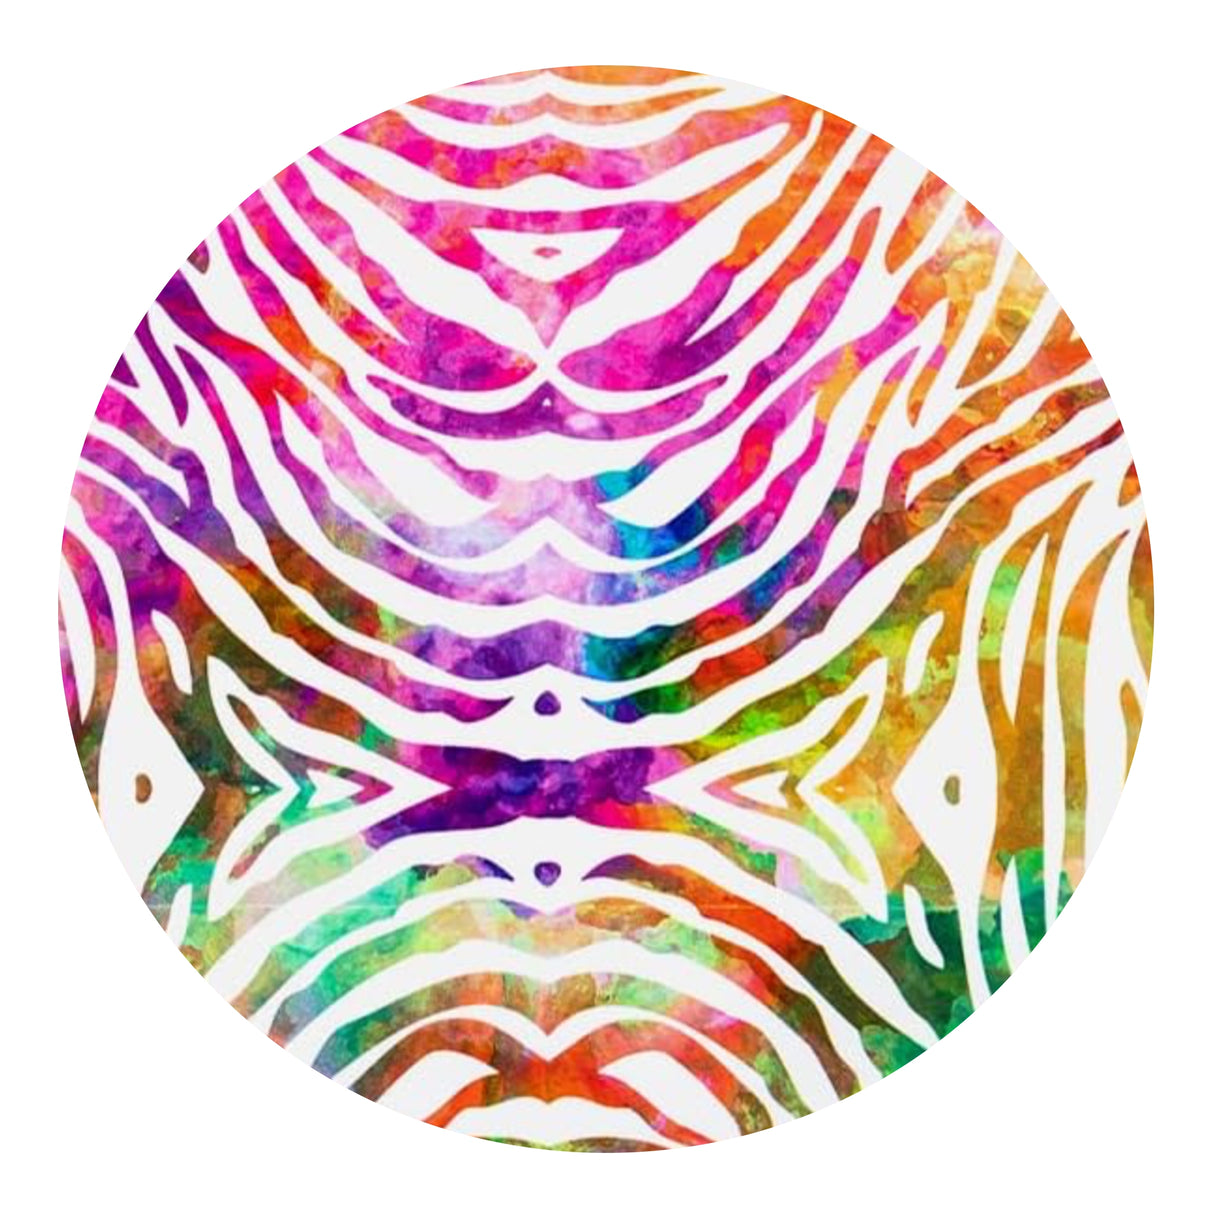 Hydro Sublimation Transfer Paper - Rainbow Zebra